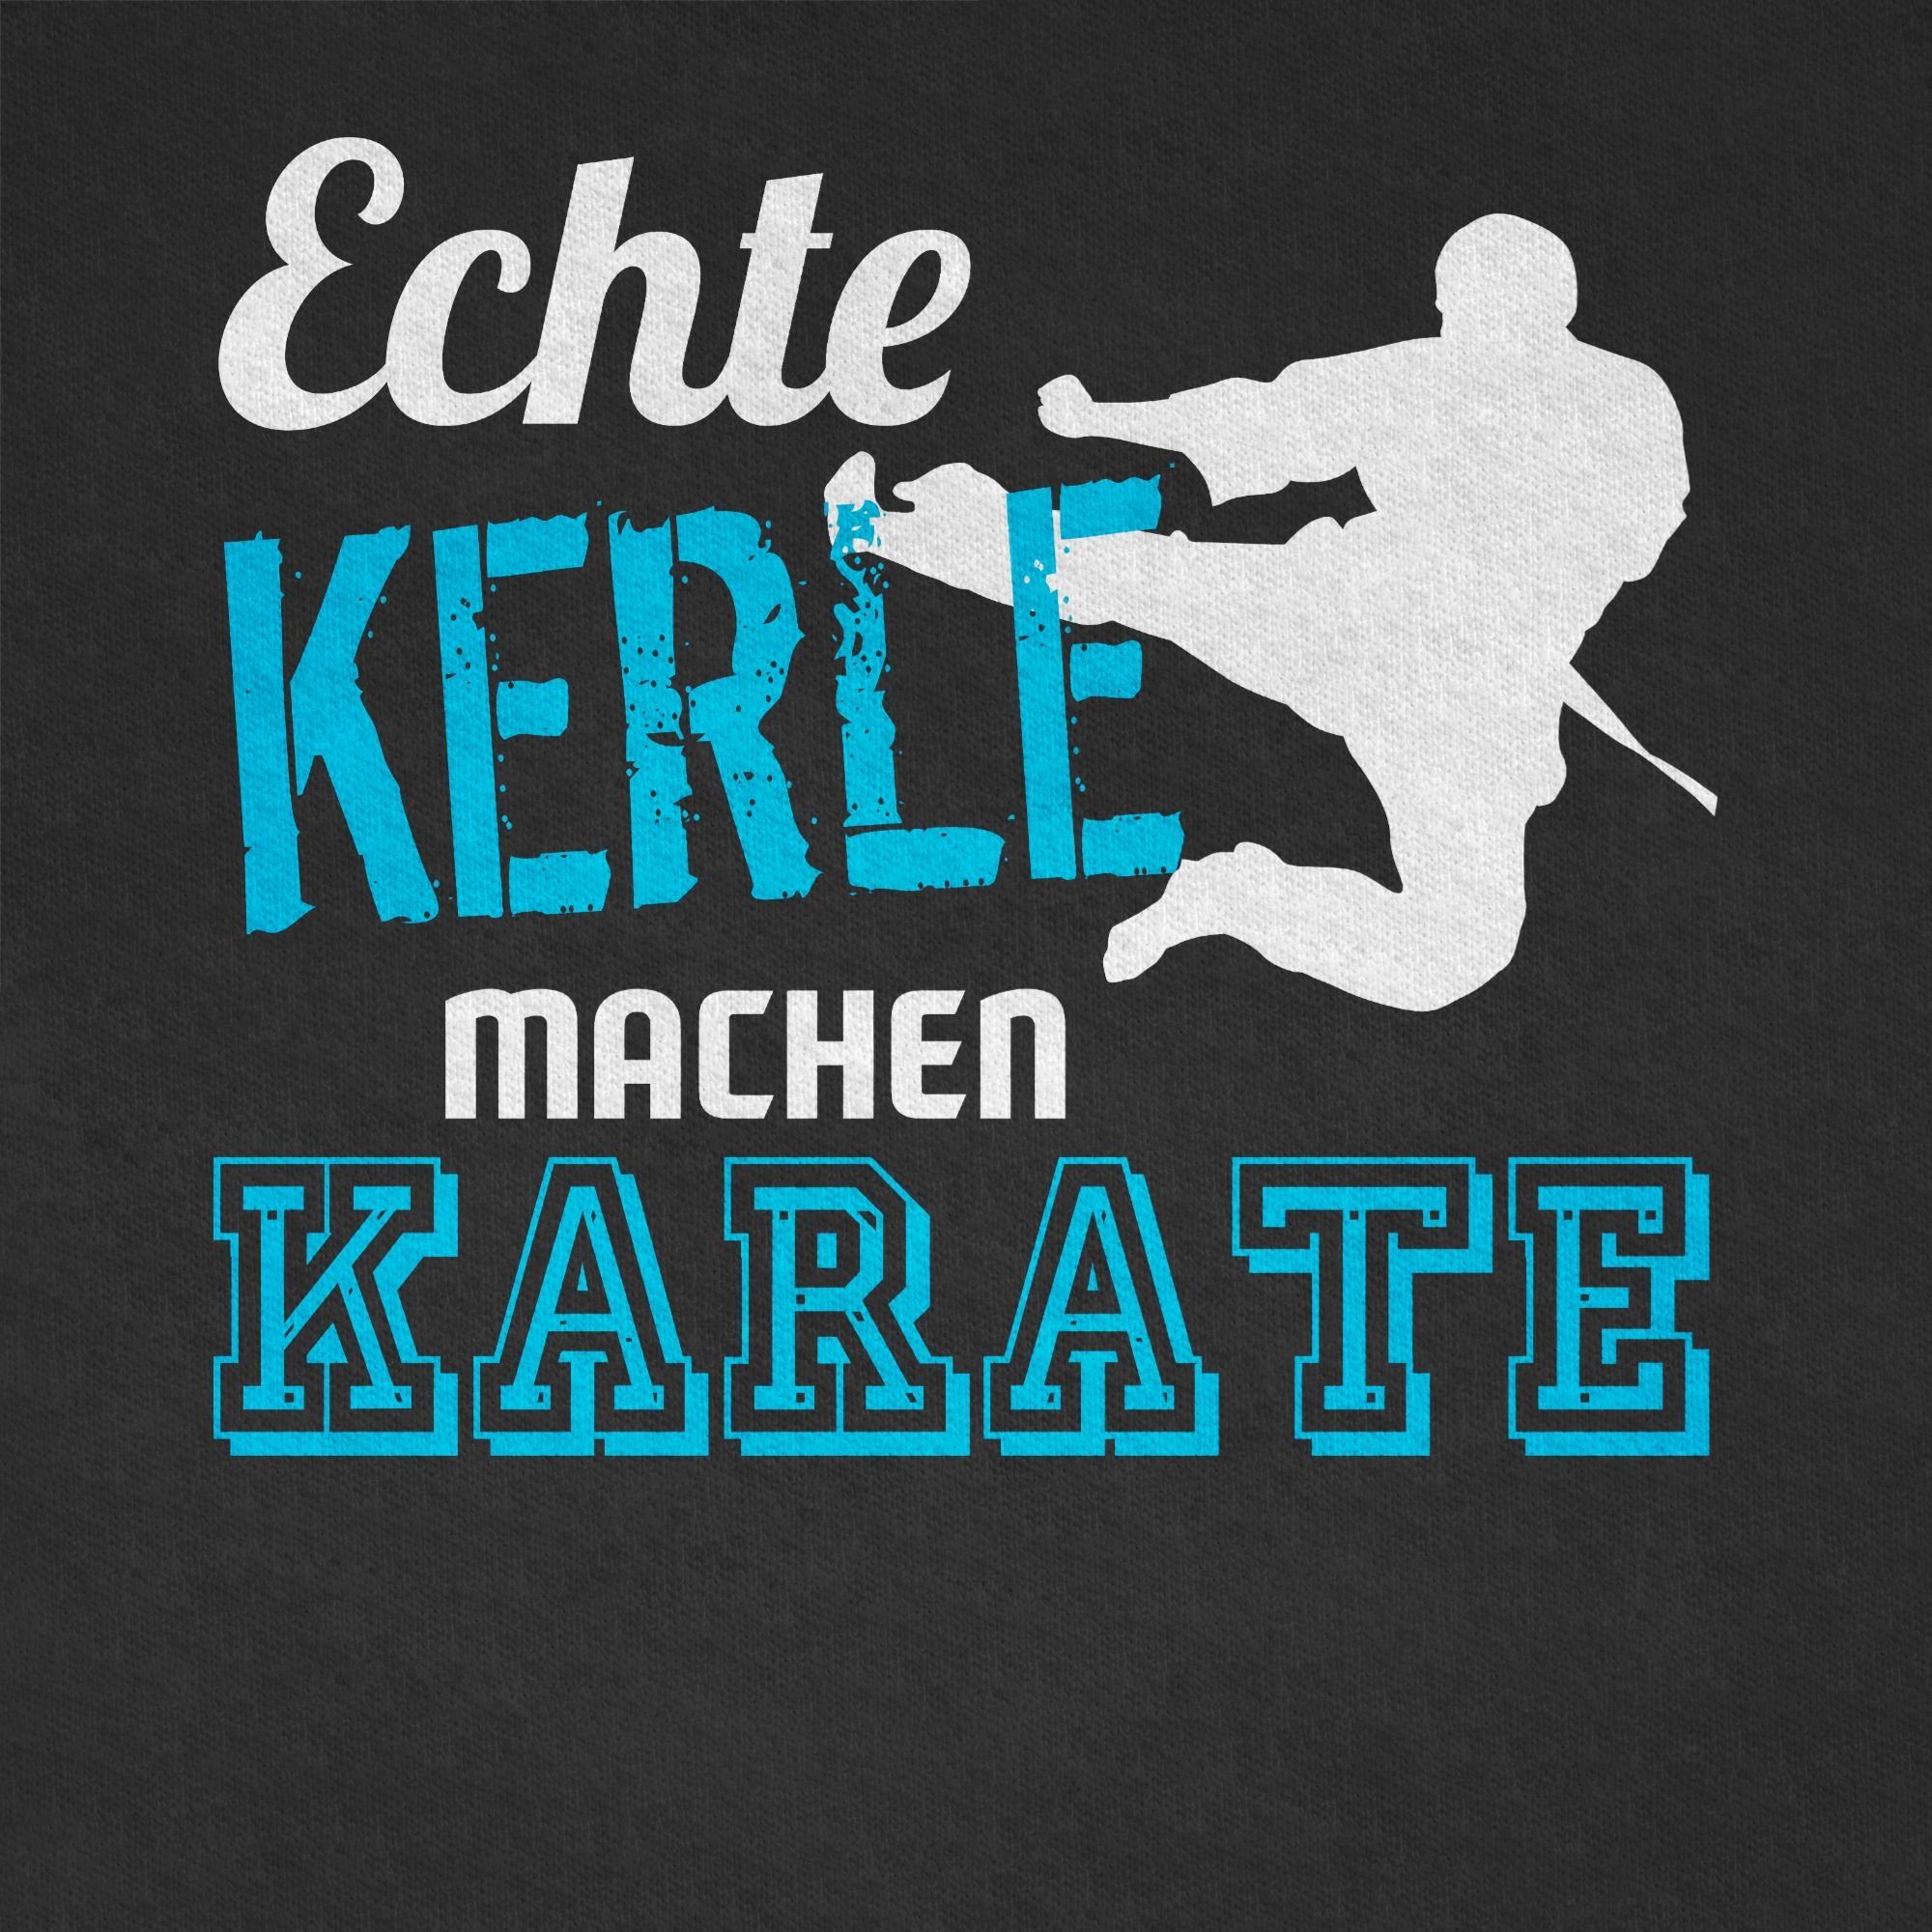 Kinder machen 2 Schwarz Kerle Kleidung Karate Sport Shirtracer Echte T-Shirt